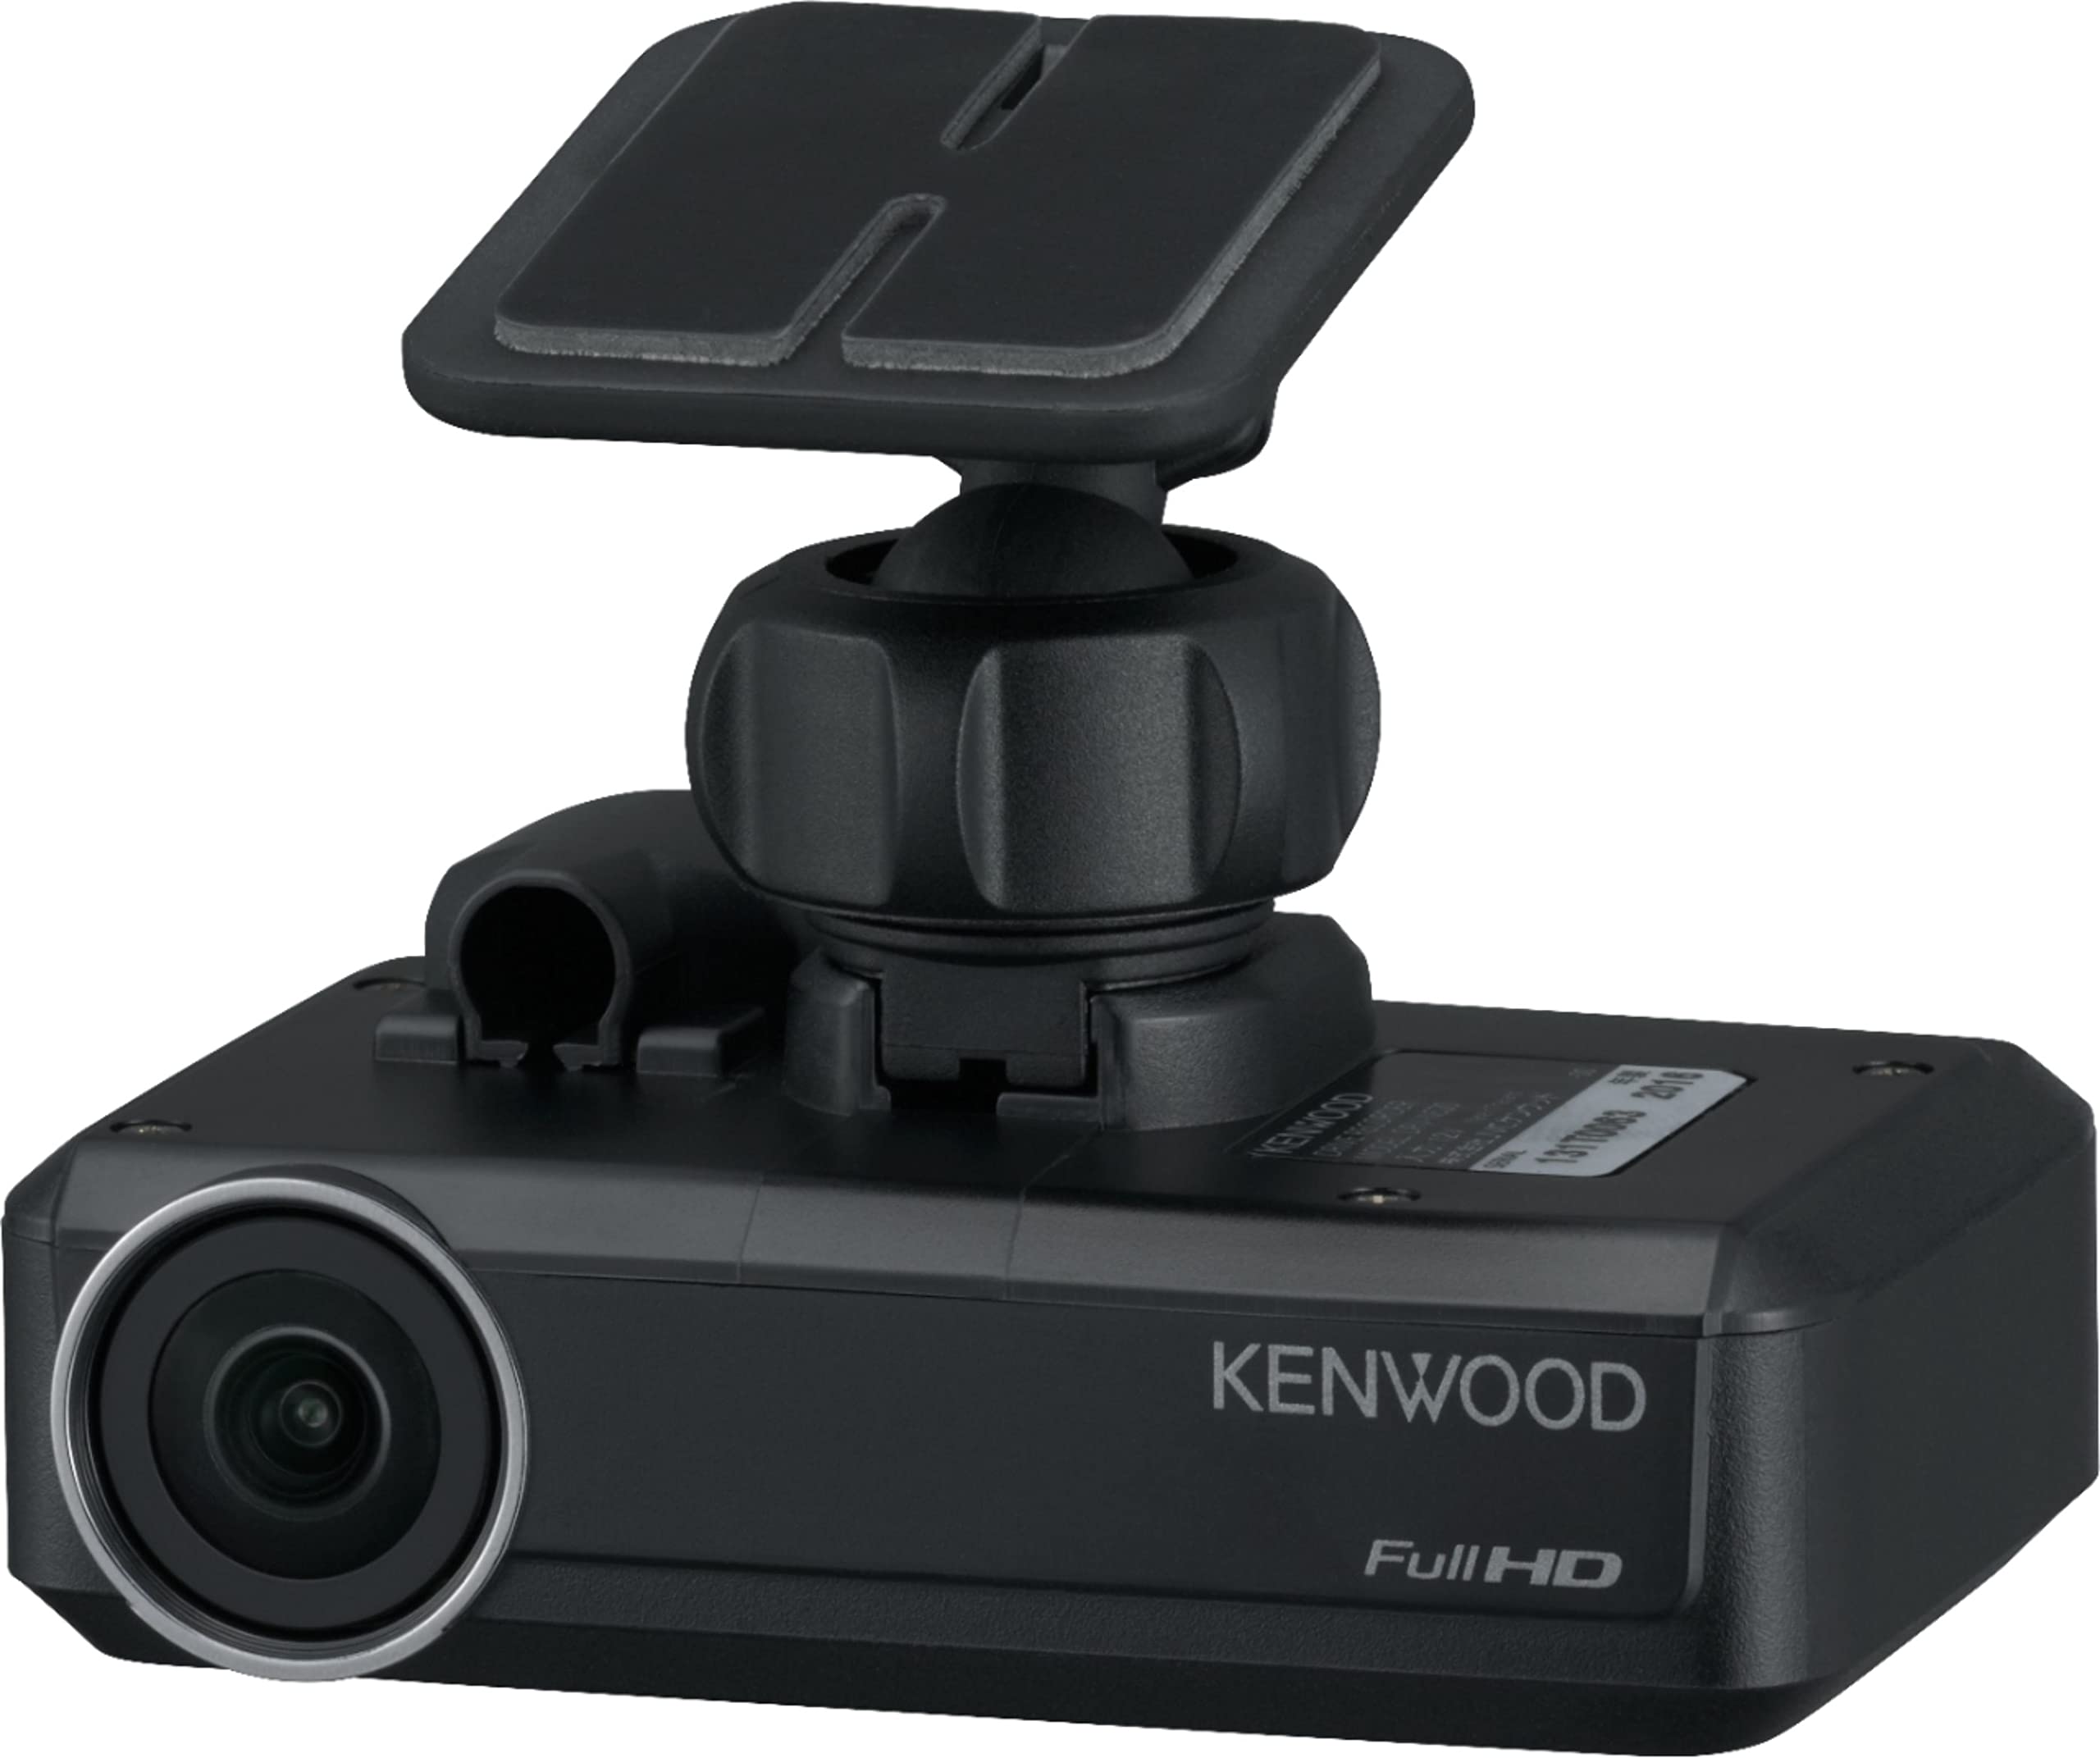 KENWOOD DRV-N520 डैश कैम